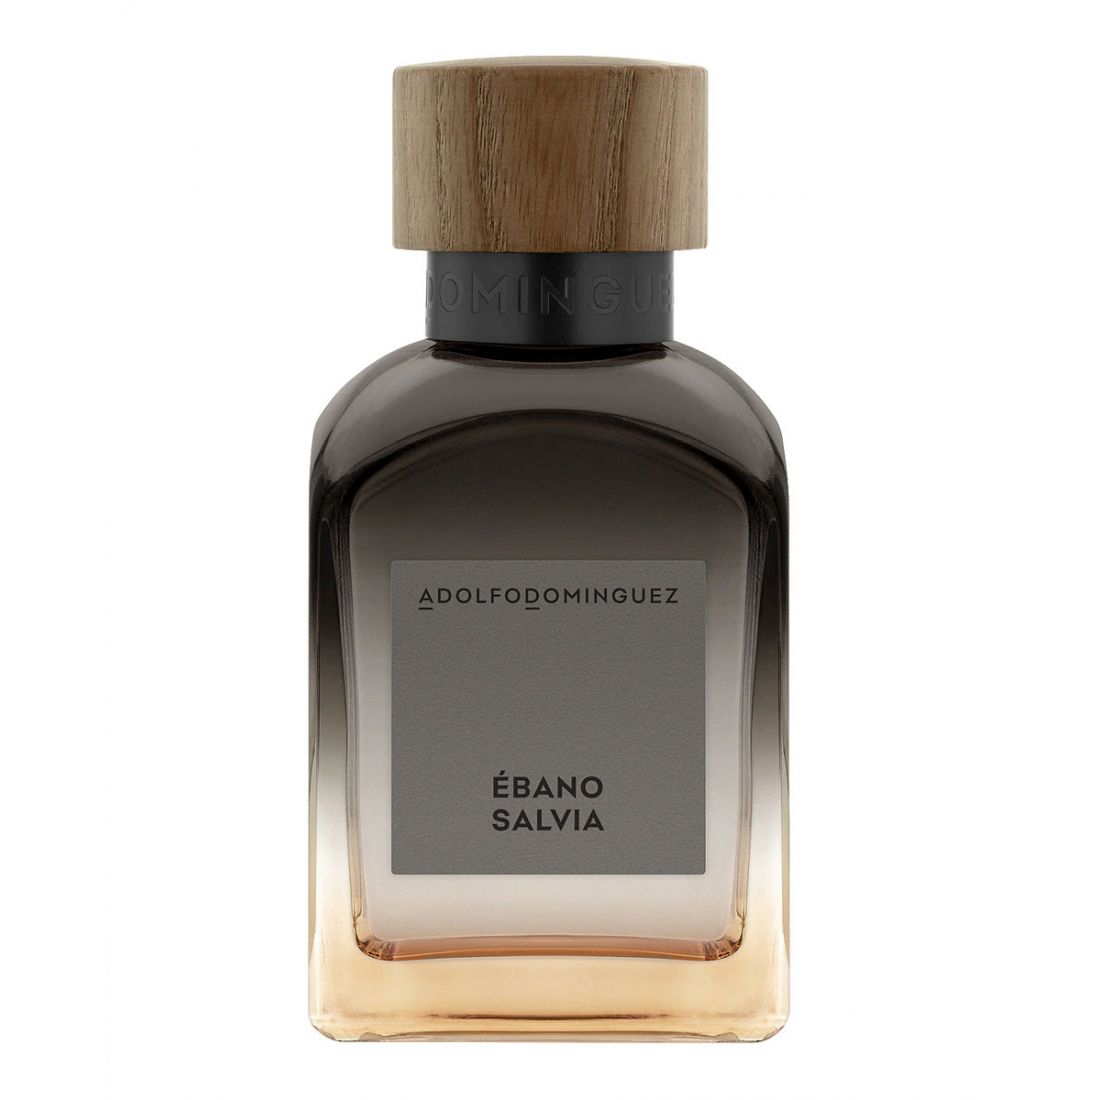 Adolfo Dominguez - Eau de parfum 'Ébano Salvia' - 120 ml